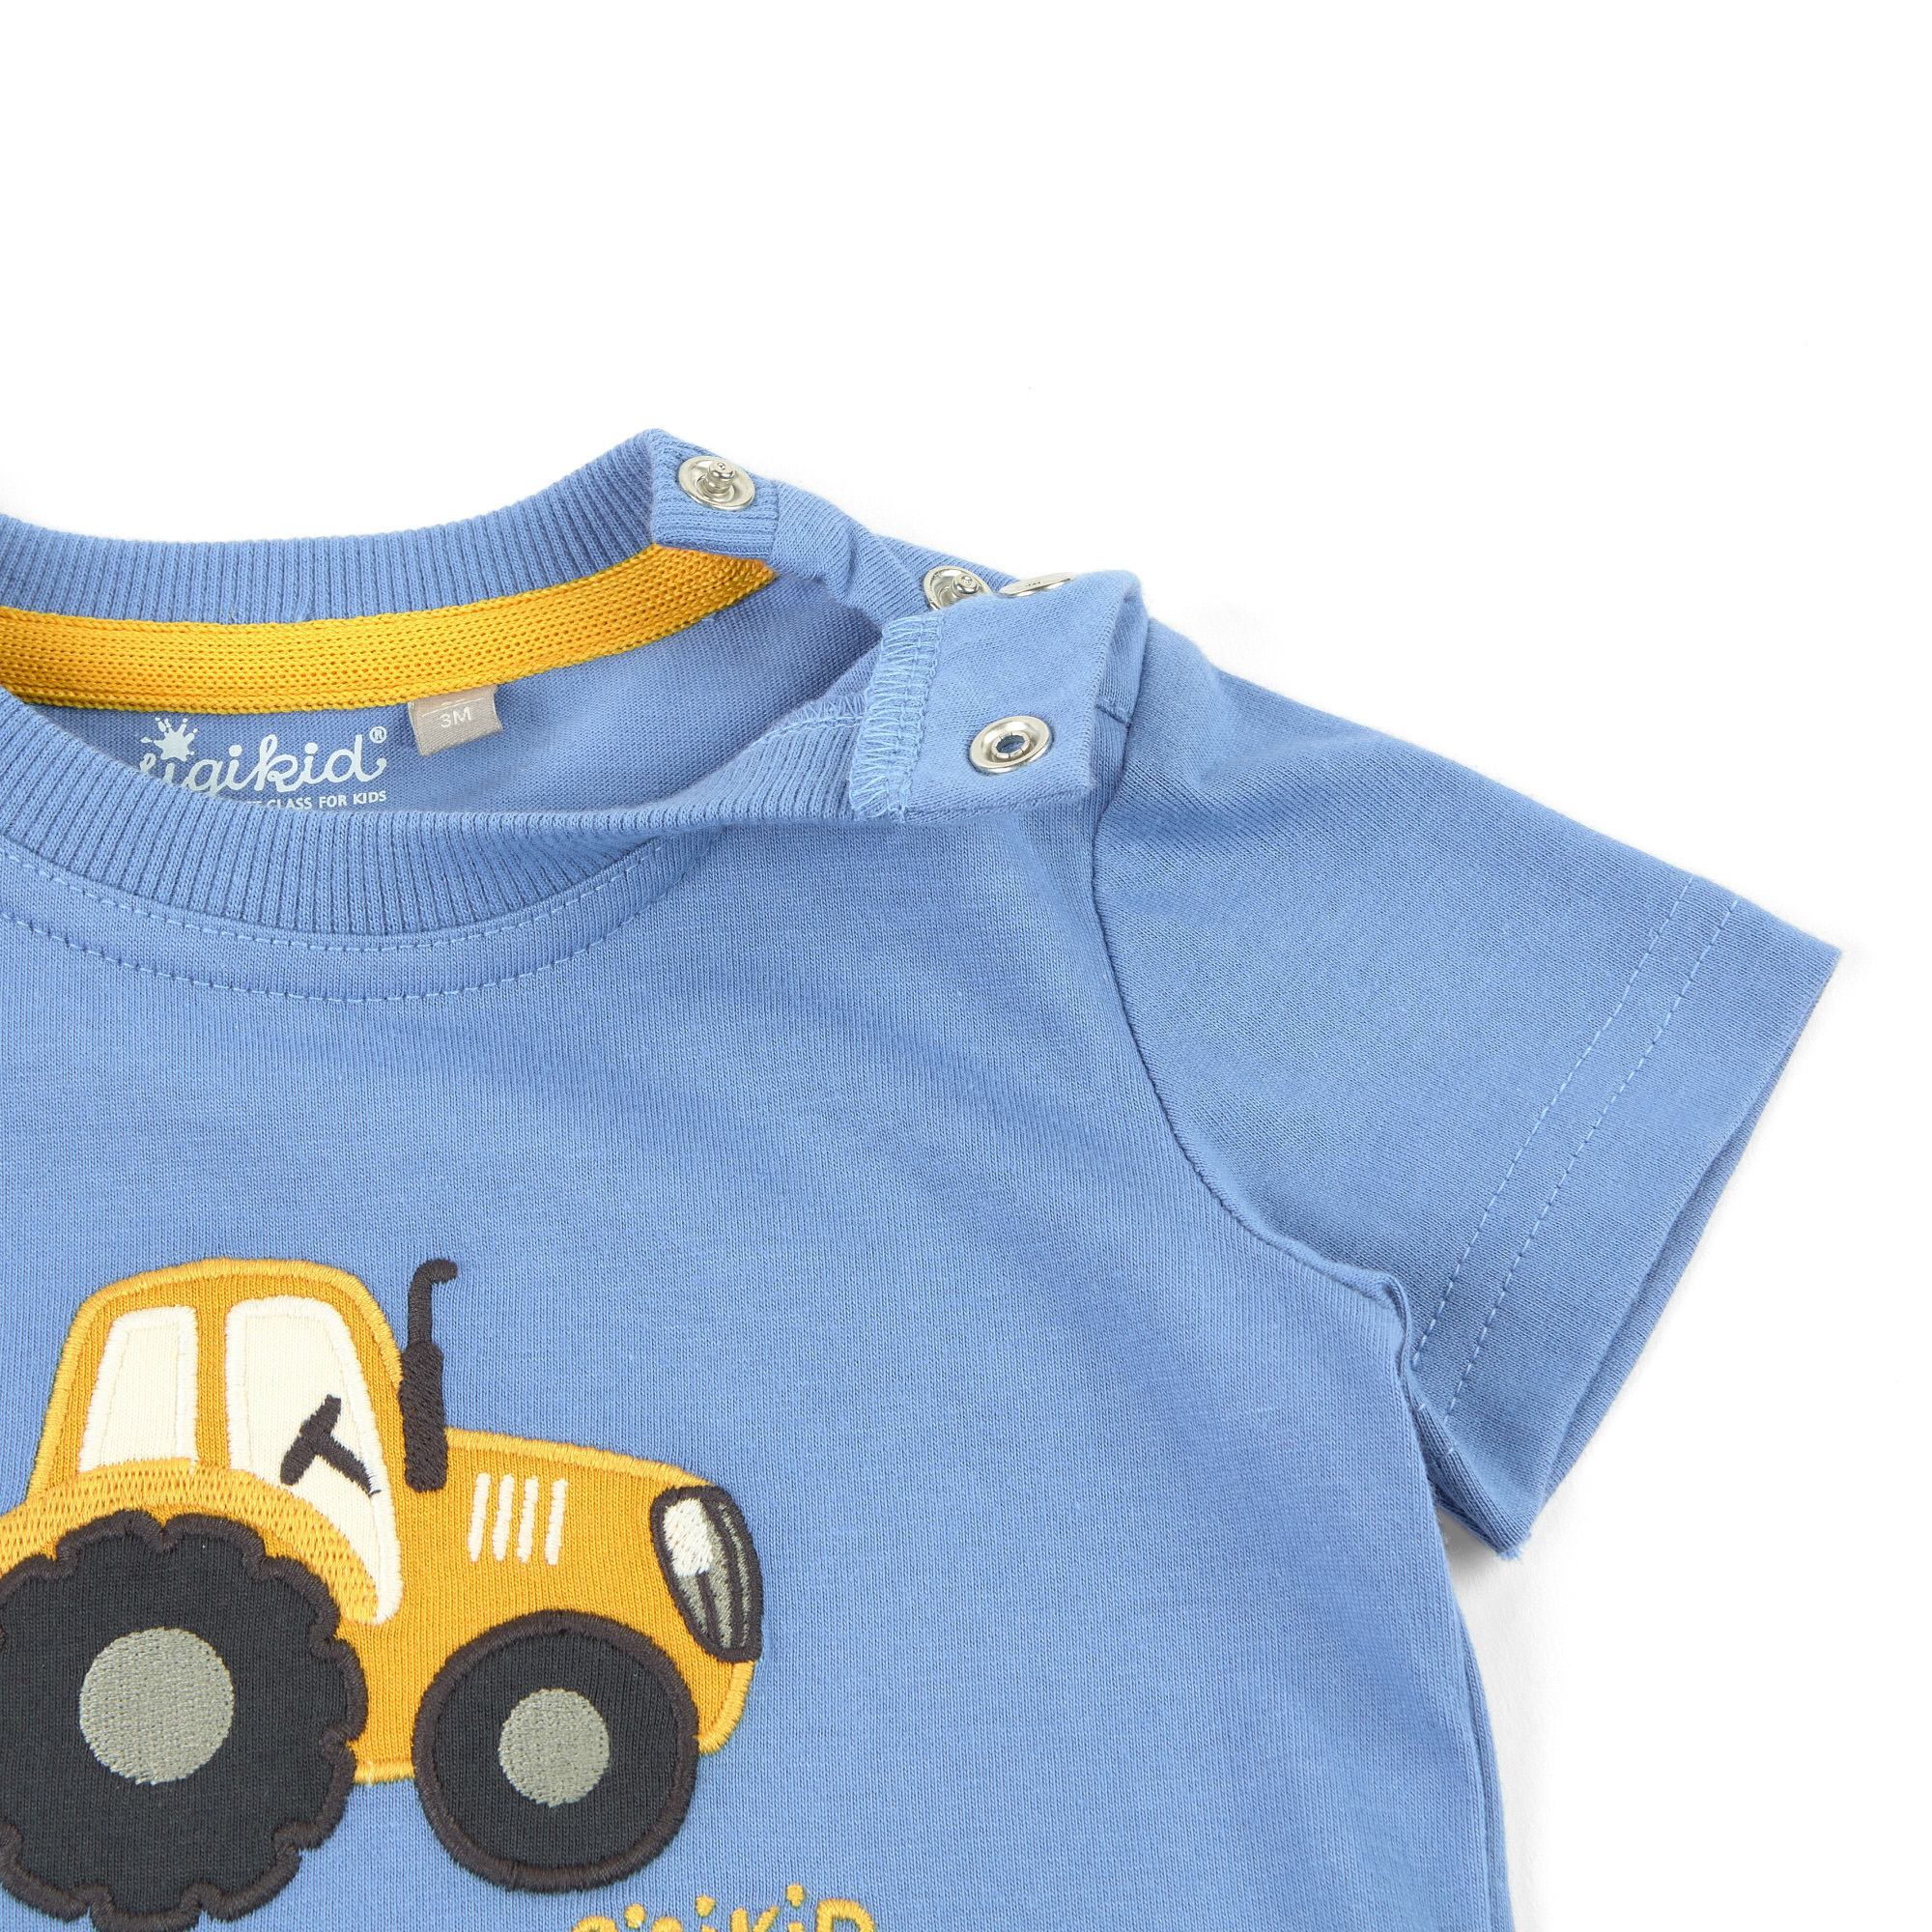 Tractor baby short sleeve Tee, blue